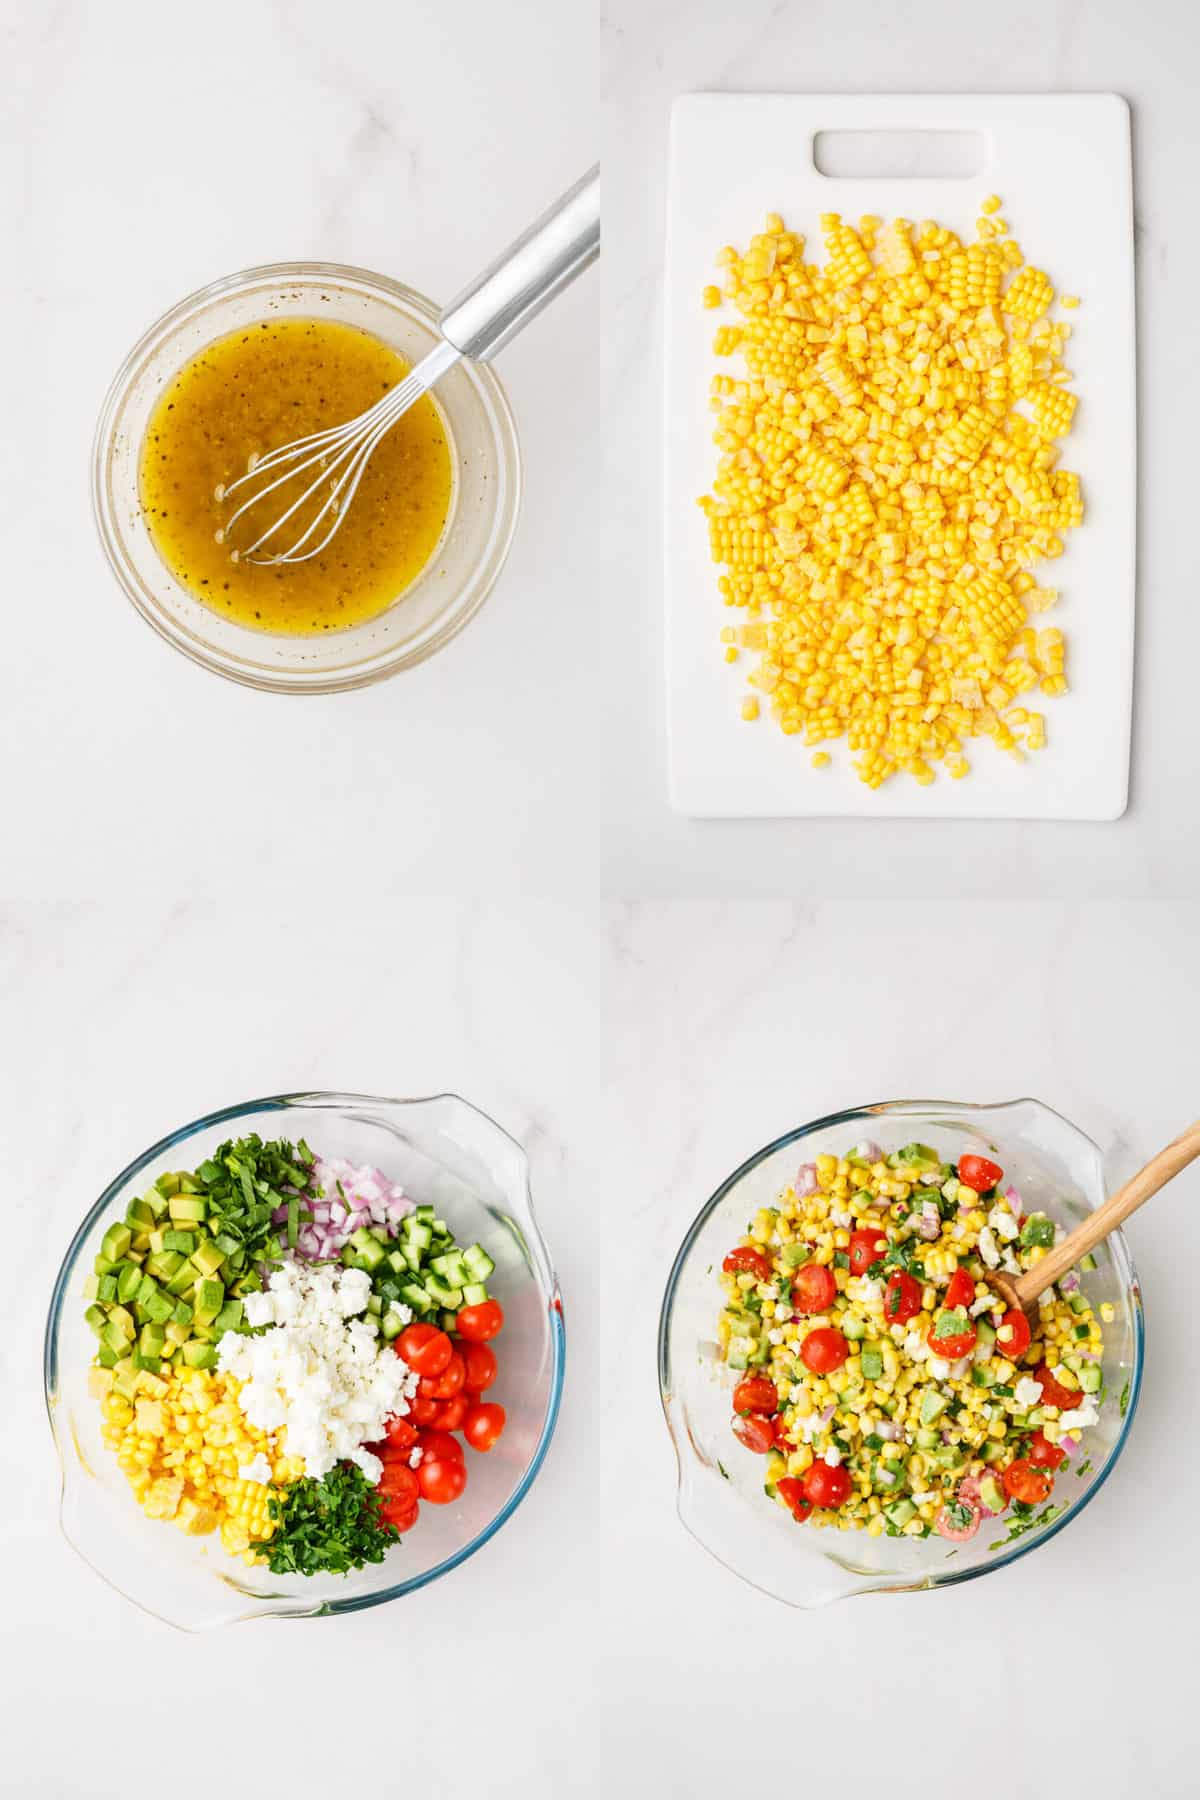 steps to make corn salad